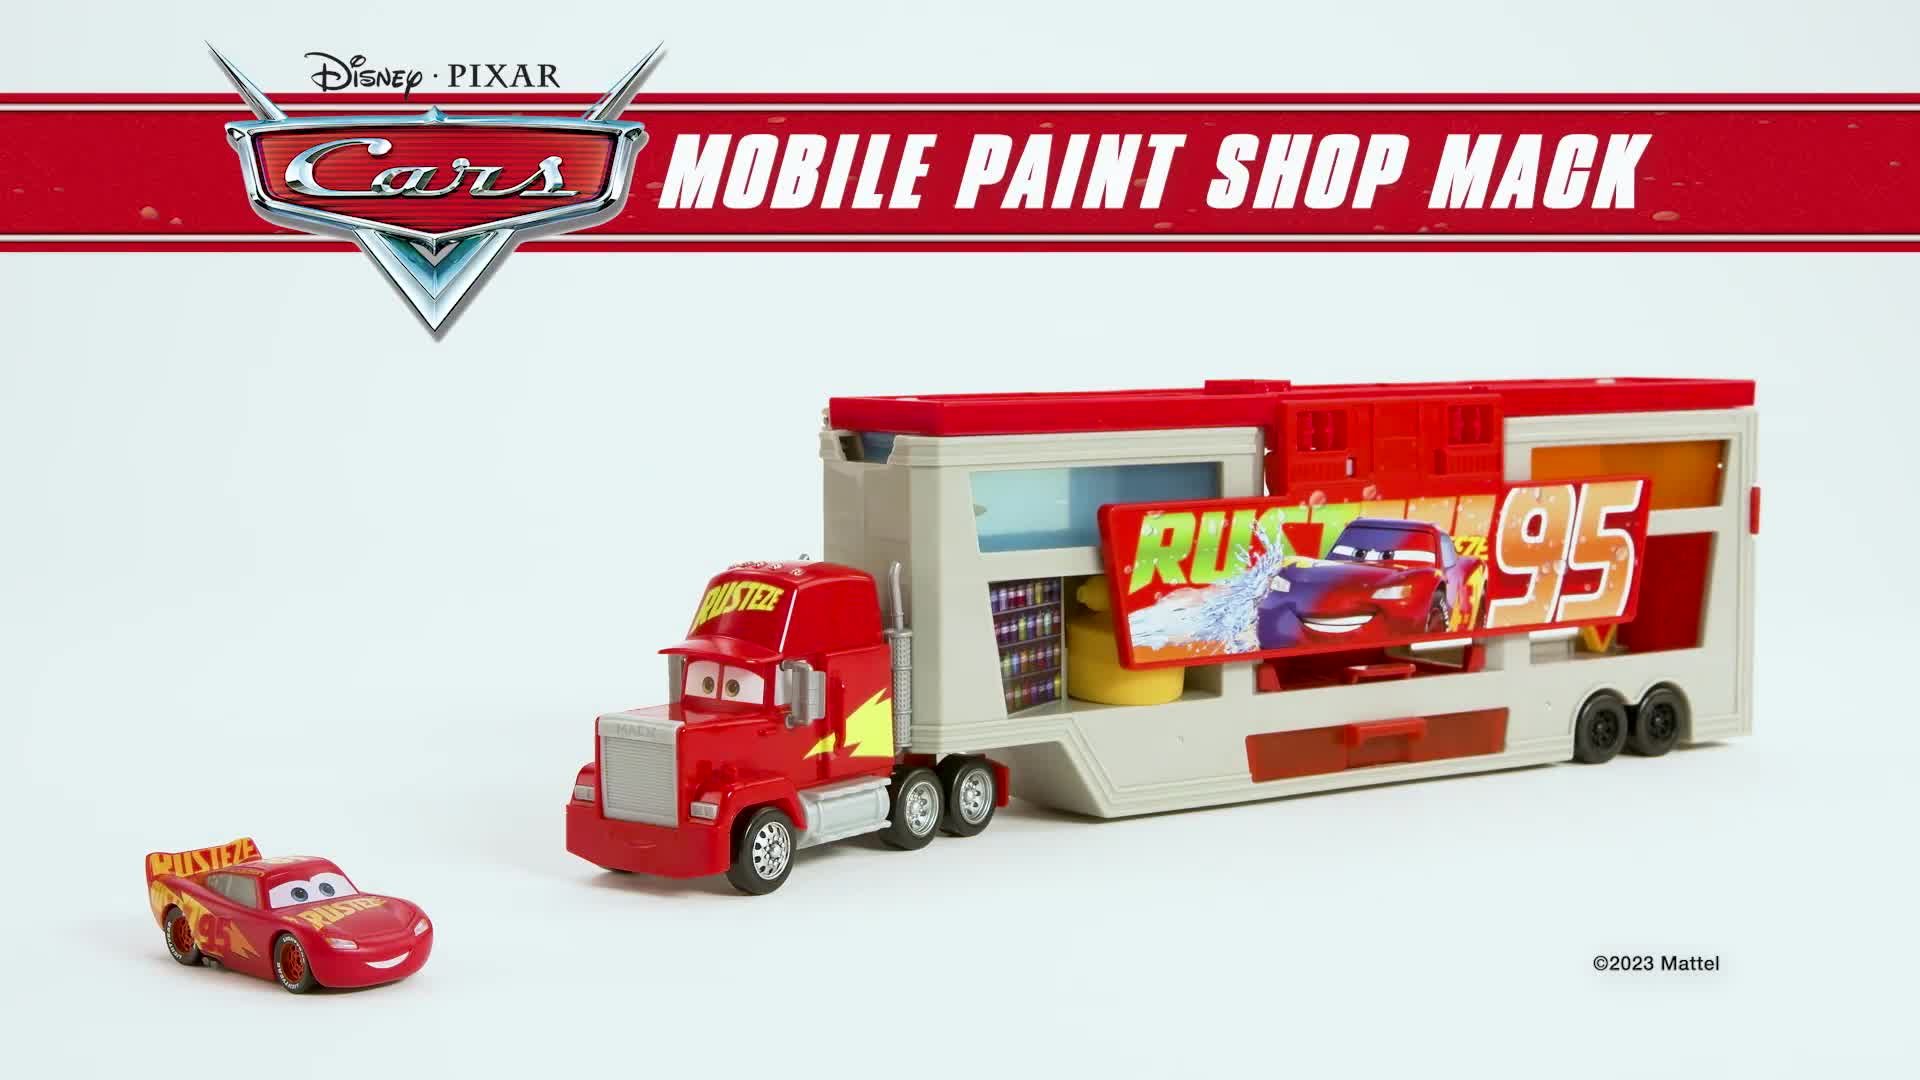 Buy Disney Pixar Colour Changers Mobile Paint Shop Mack Playset, Toy cars  and trucks